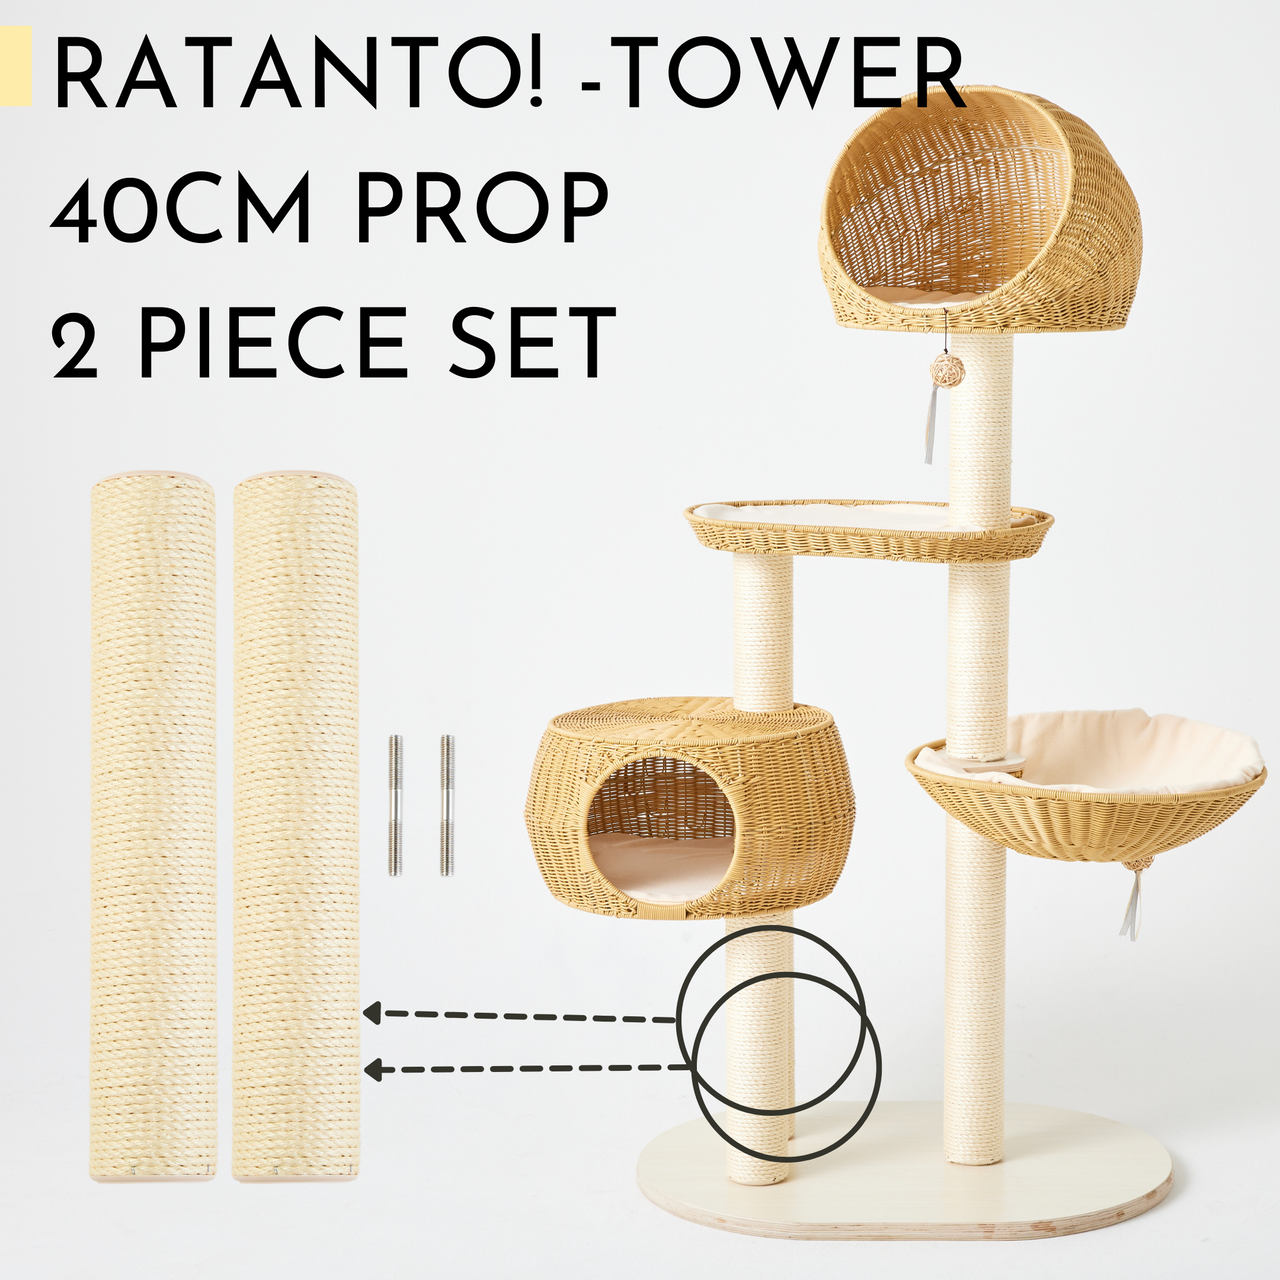 ratanto!シリーズ 置き型キャットタワー専用 交換用支柱40cm2本